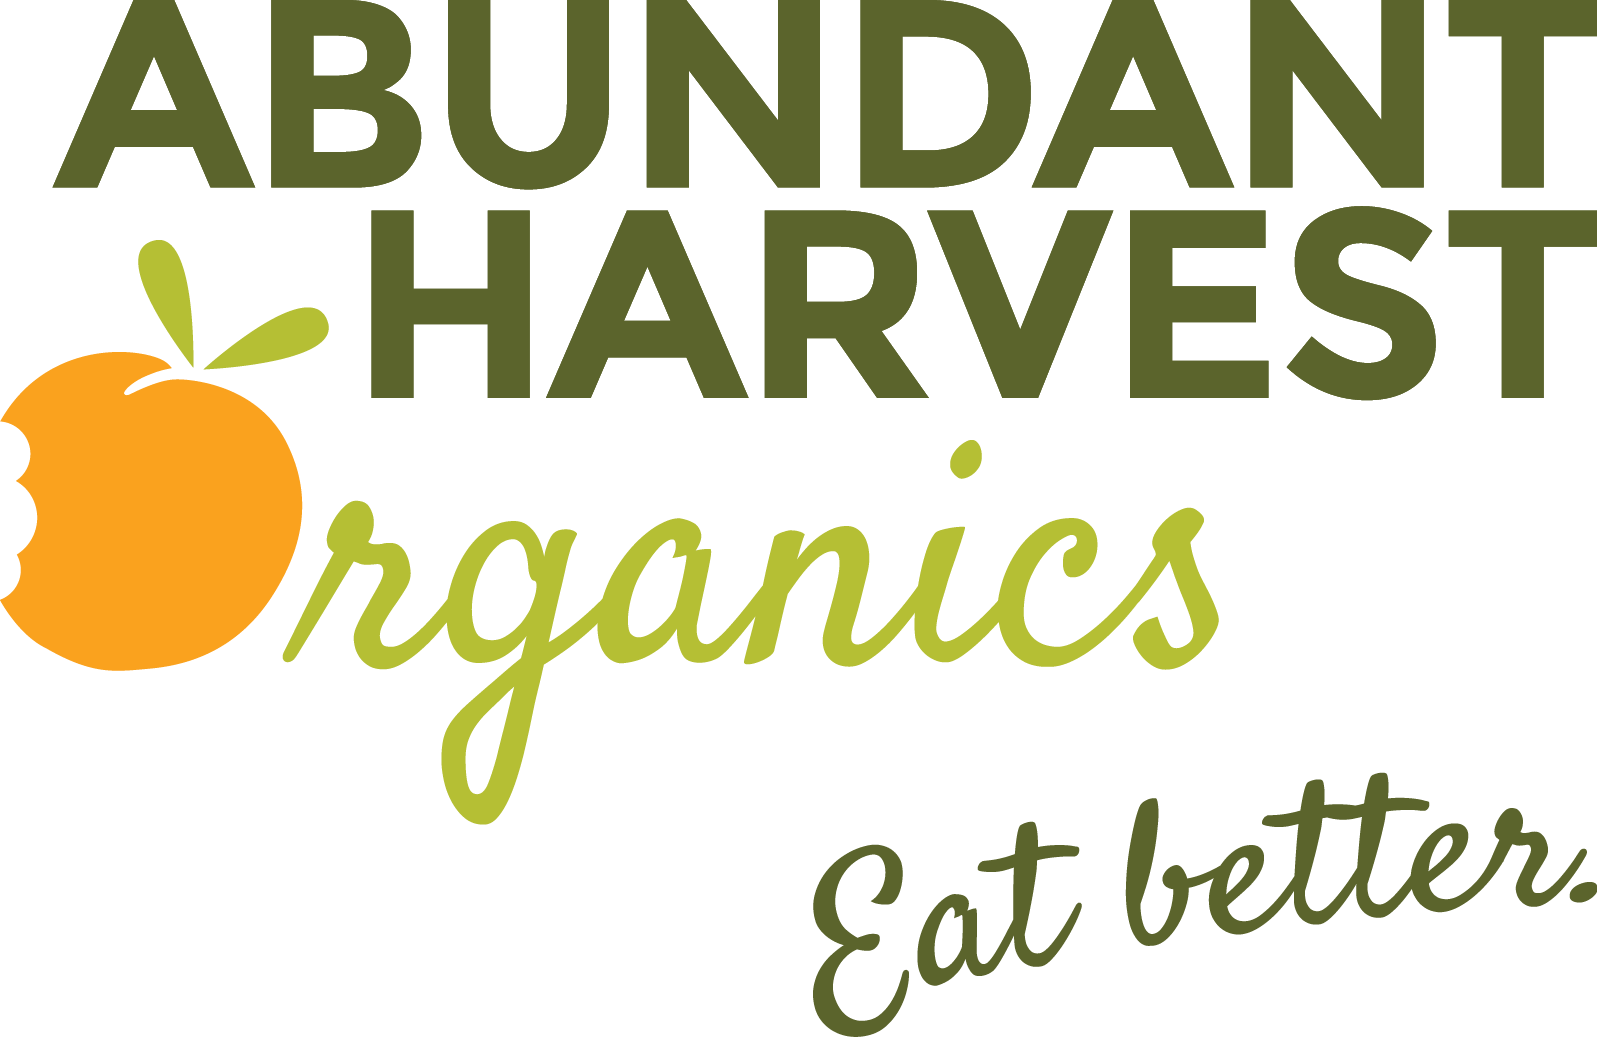 Abundant Harvest Organics